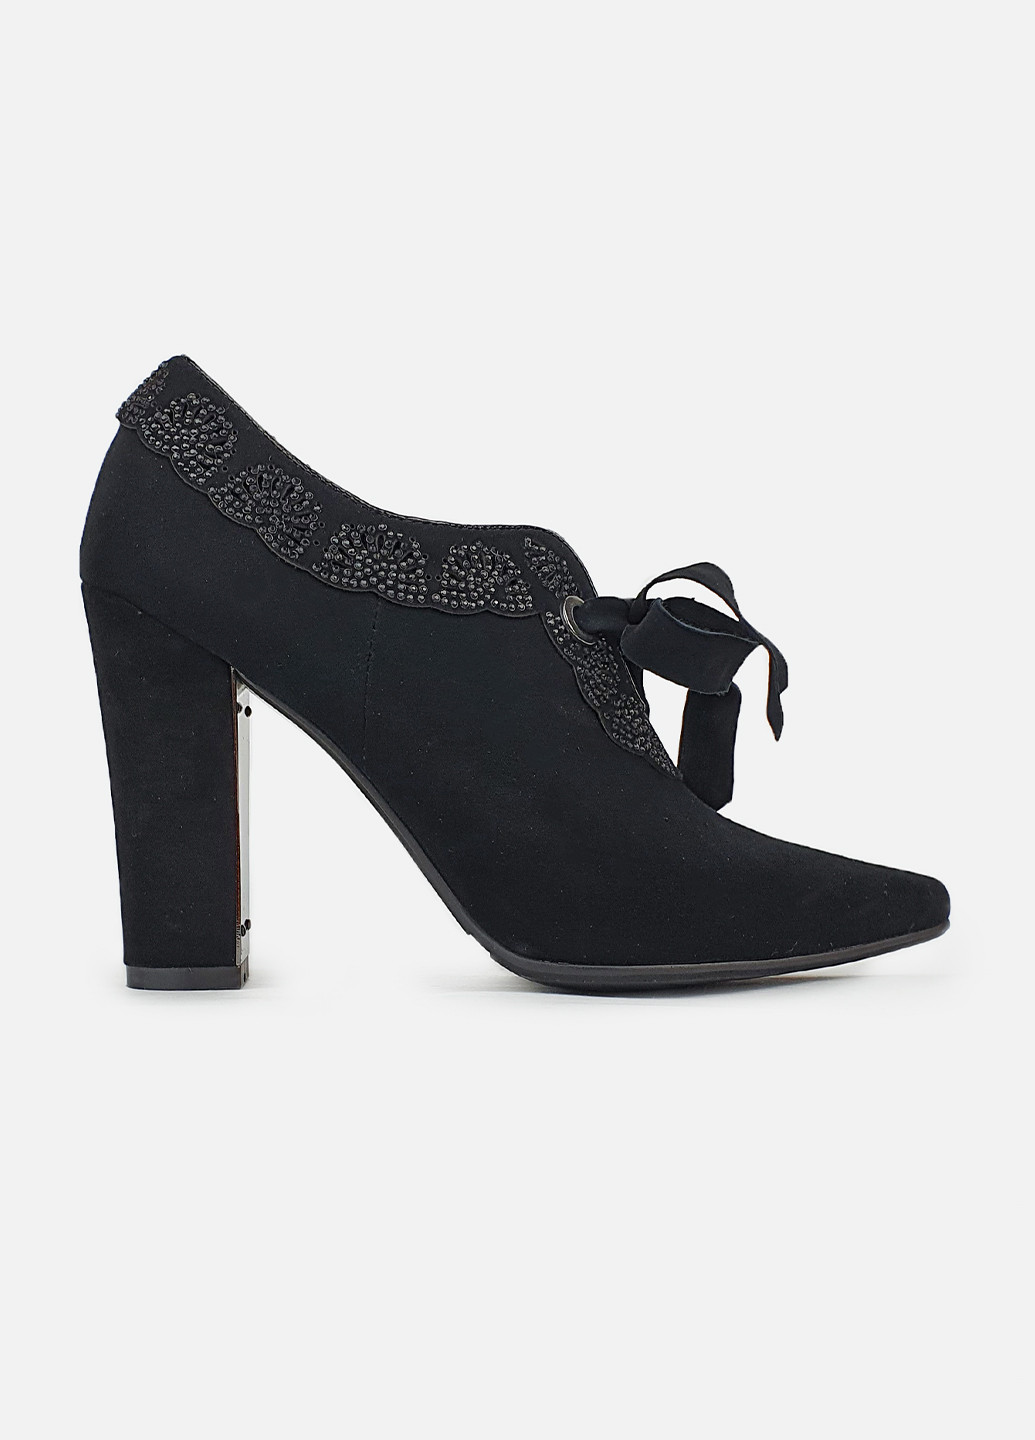 Туфли женские на шнурках черные на каблуке Maria Moro